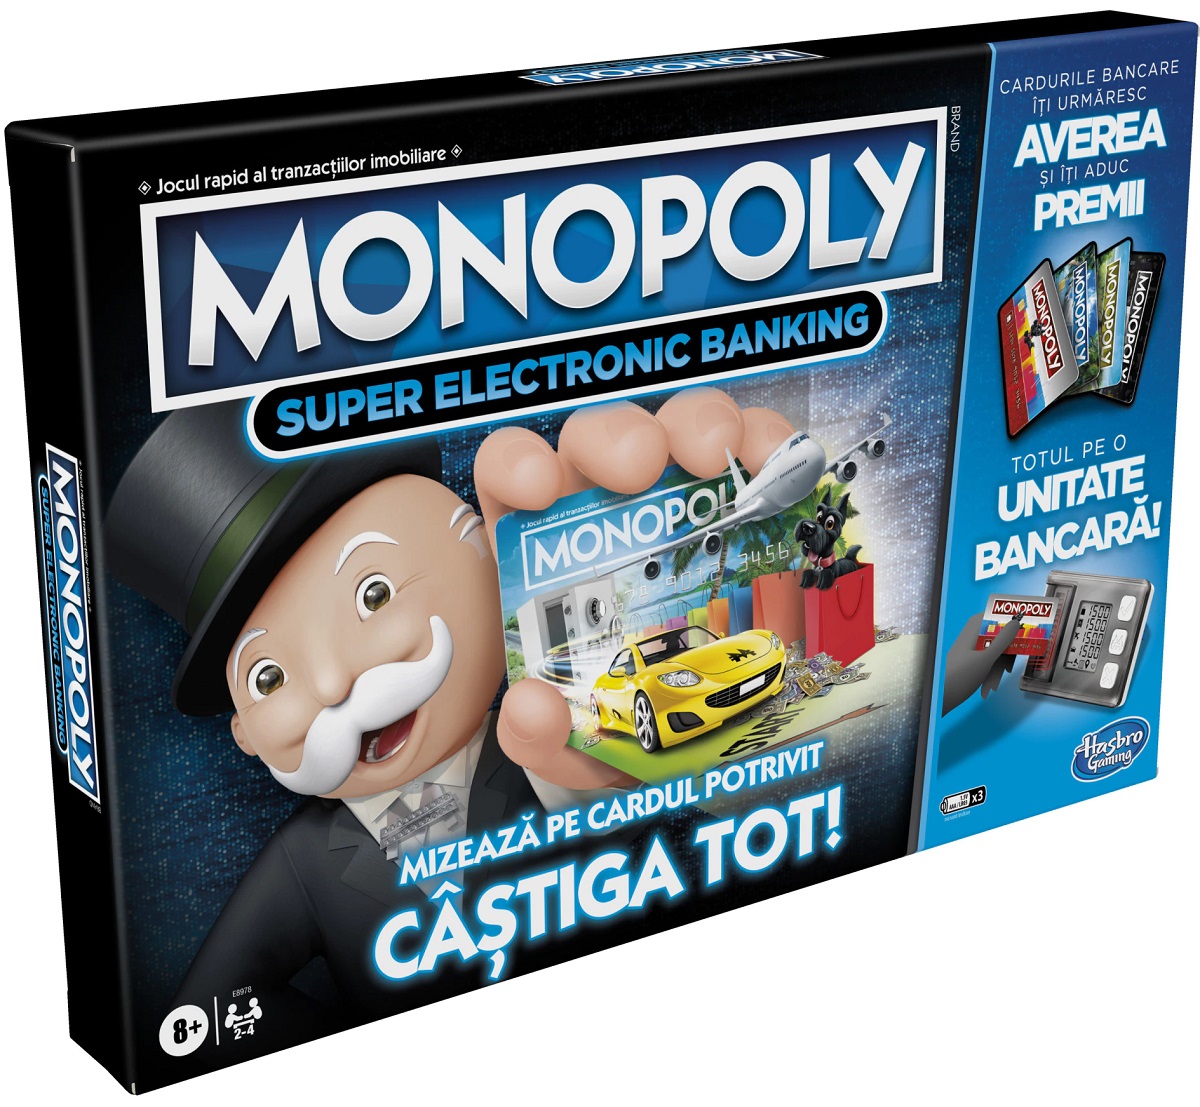 Monopoly Super Electronic Banking: Castiga tot